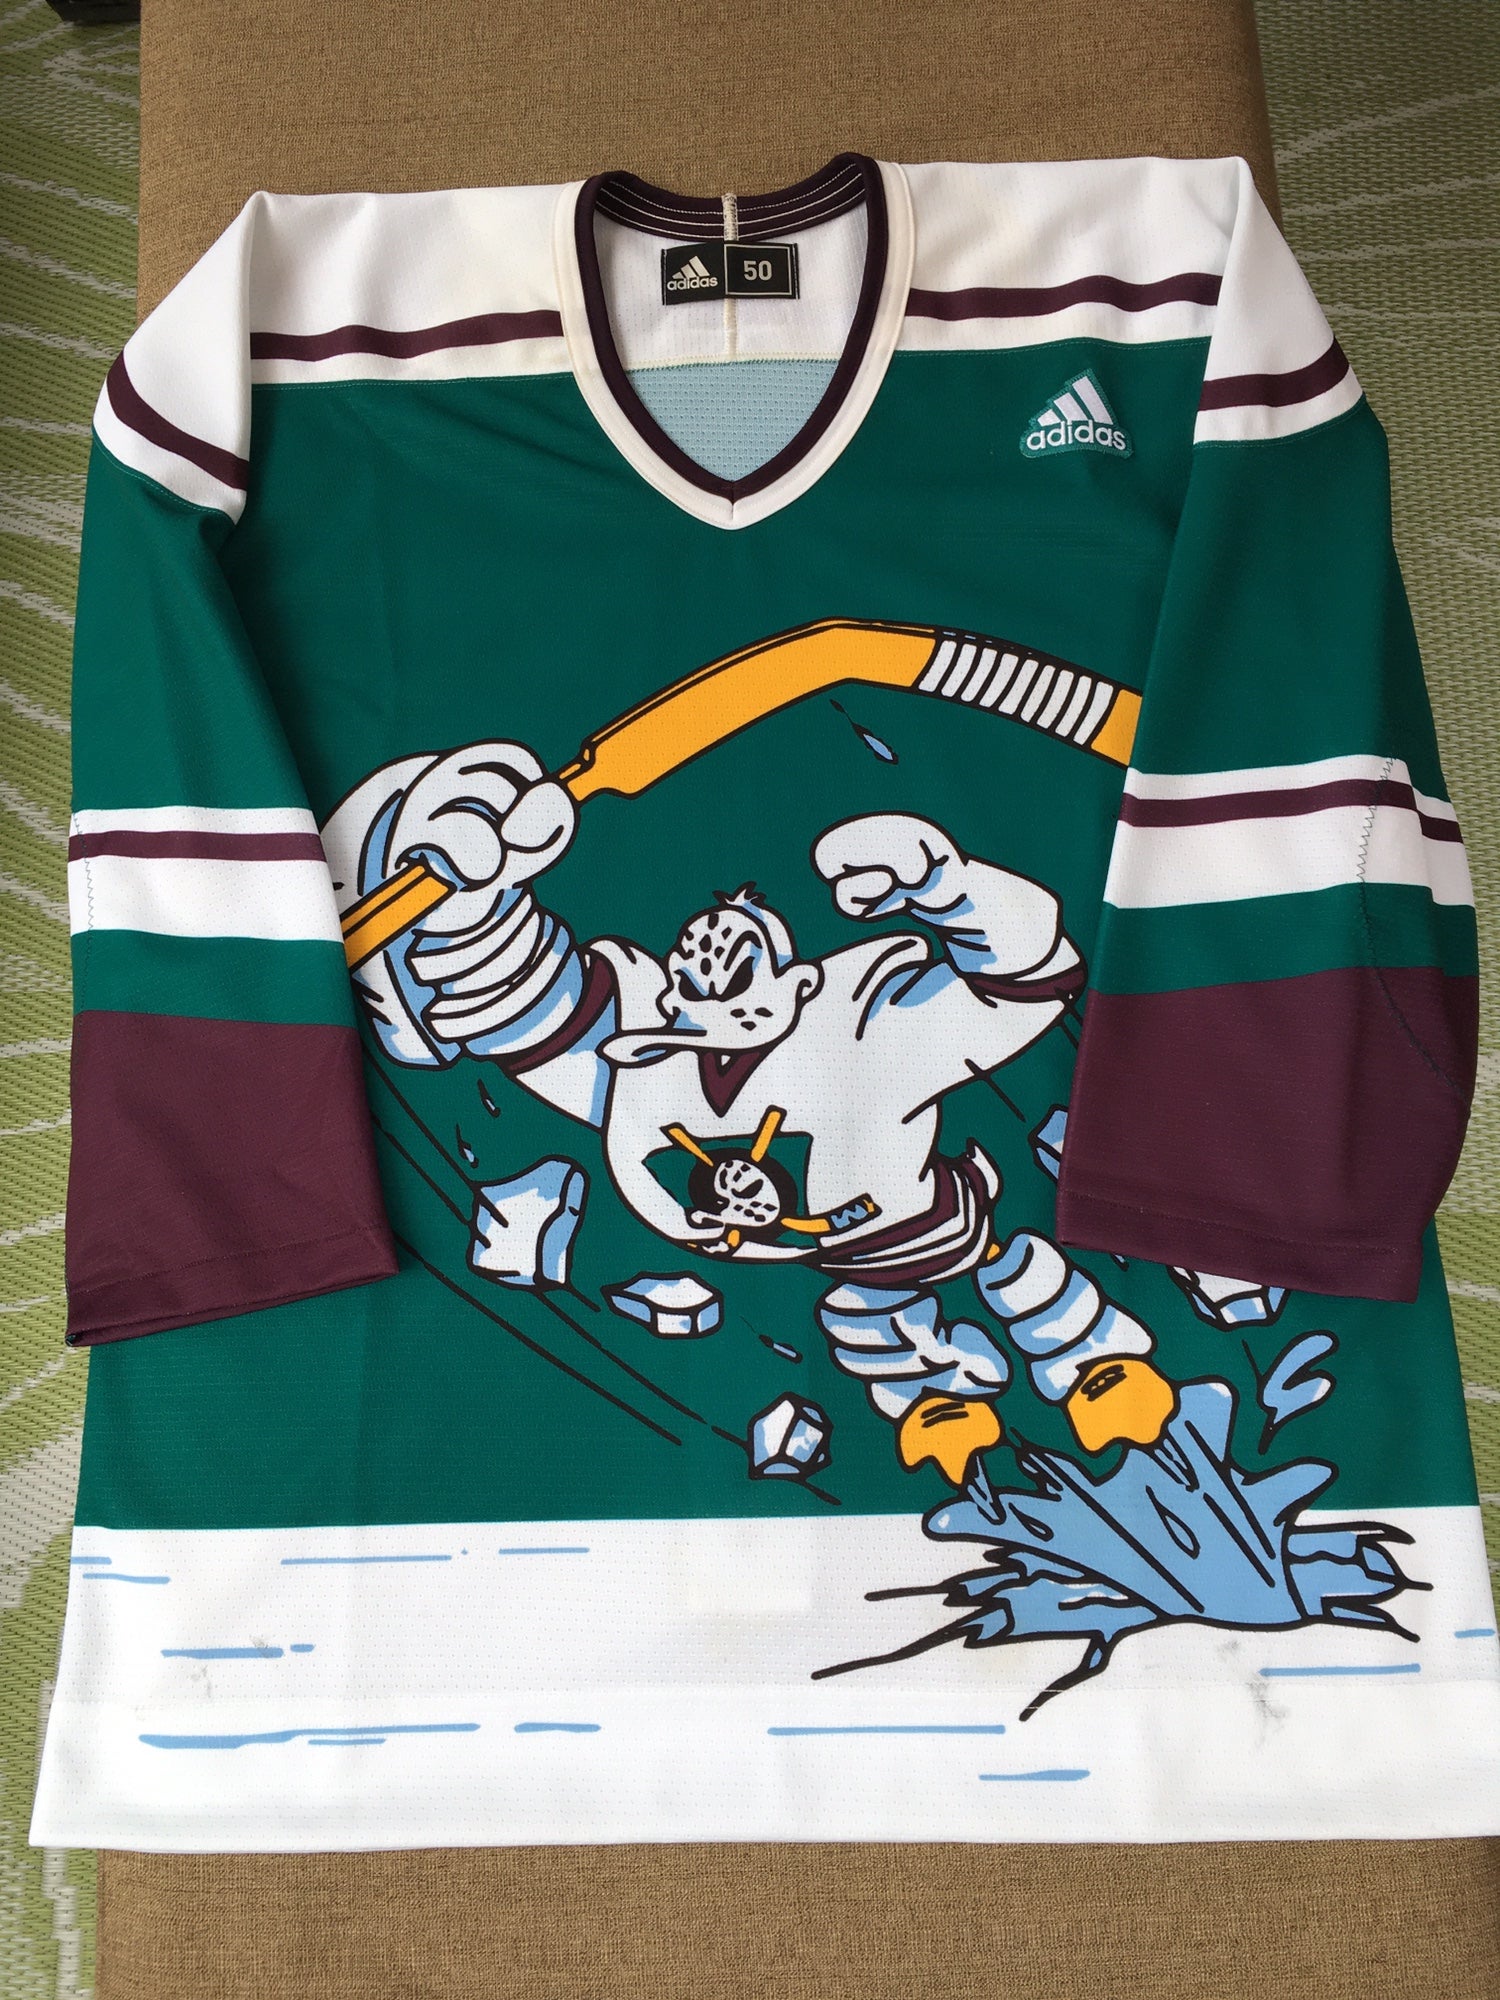 ADIDAS x DISNEY Mighty Ducks CONWAY Jersey Medium (size 50) NWT Retail $230